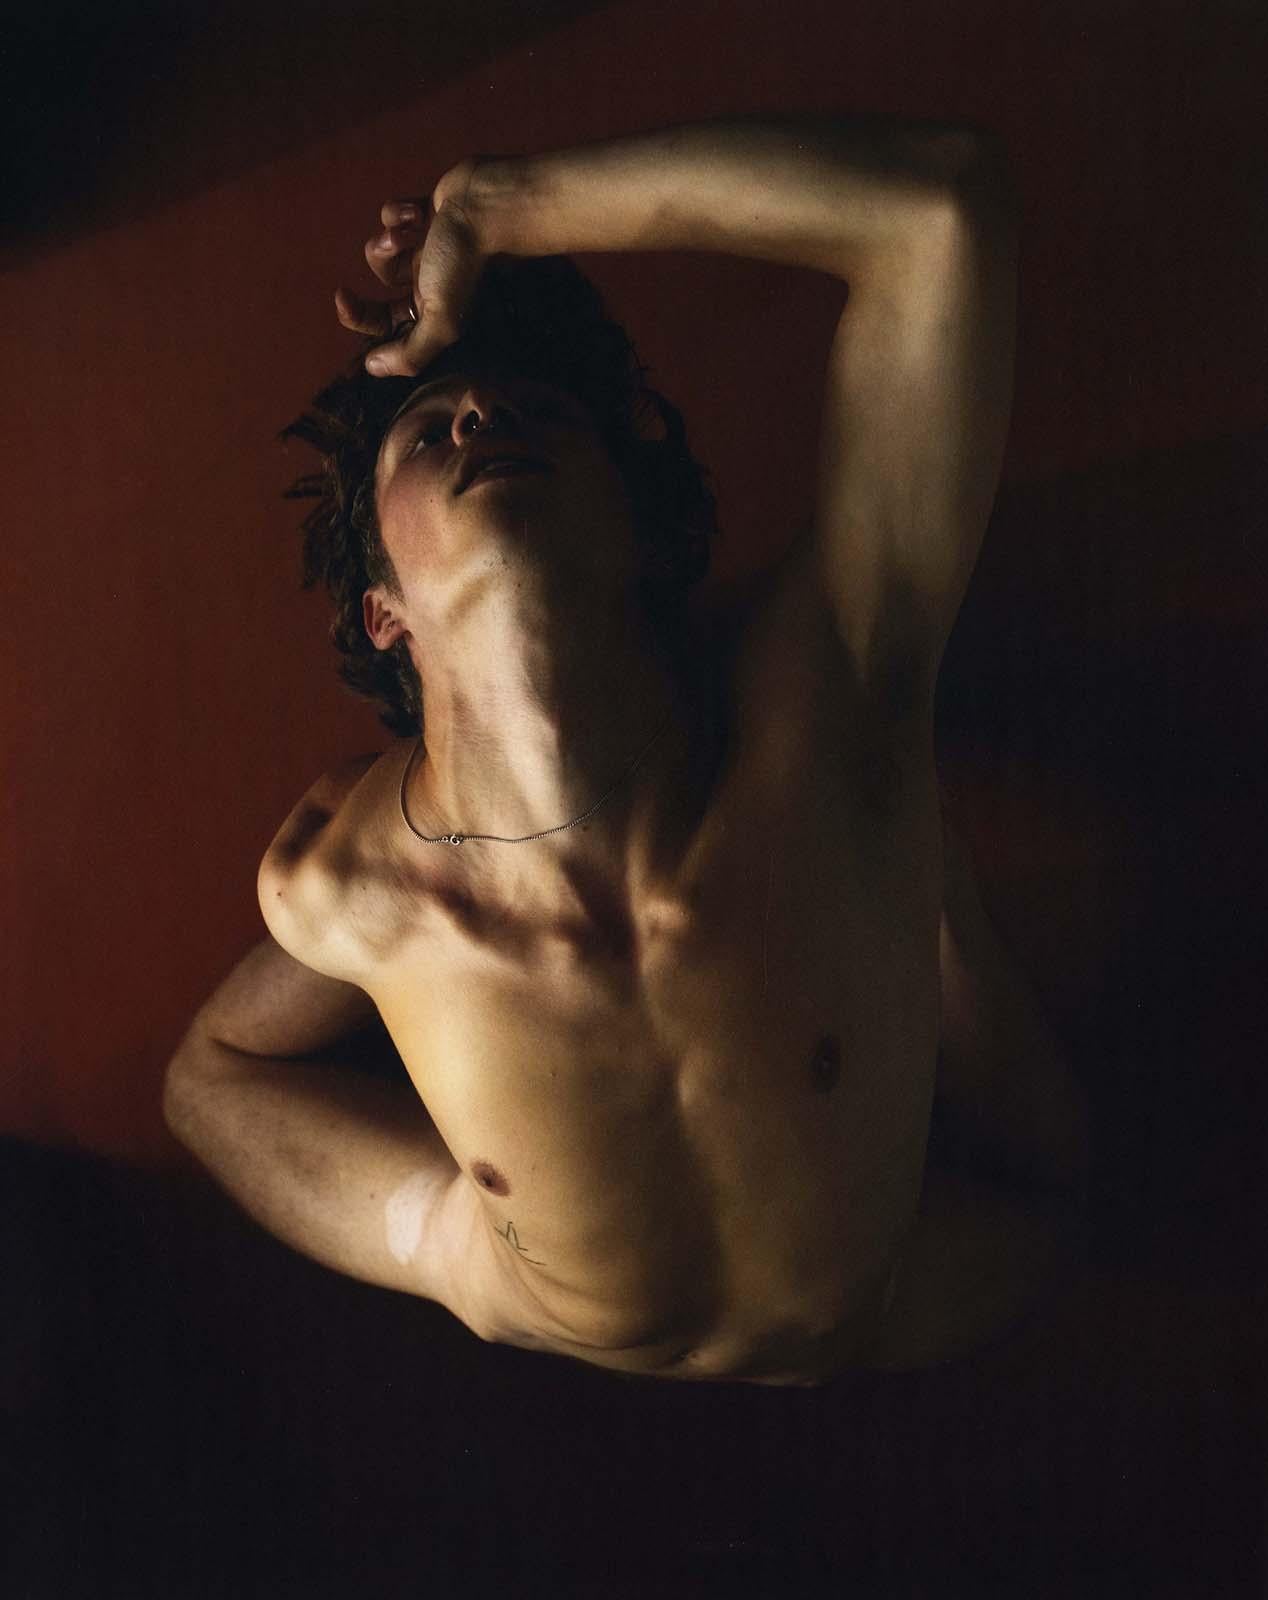 Alex Avgud Nude Photograph - Tom on the Red Floor